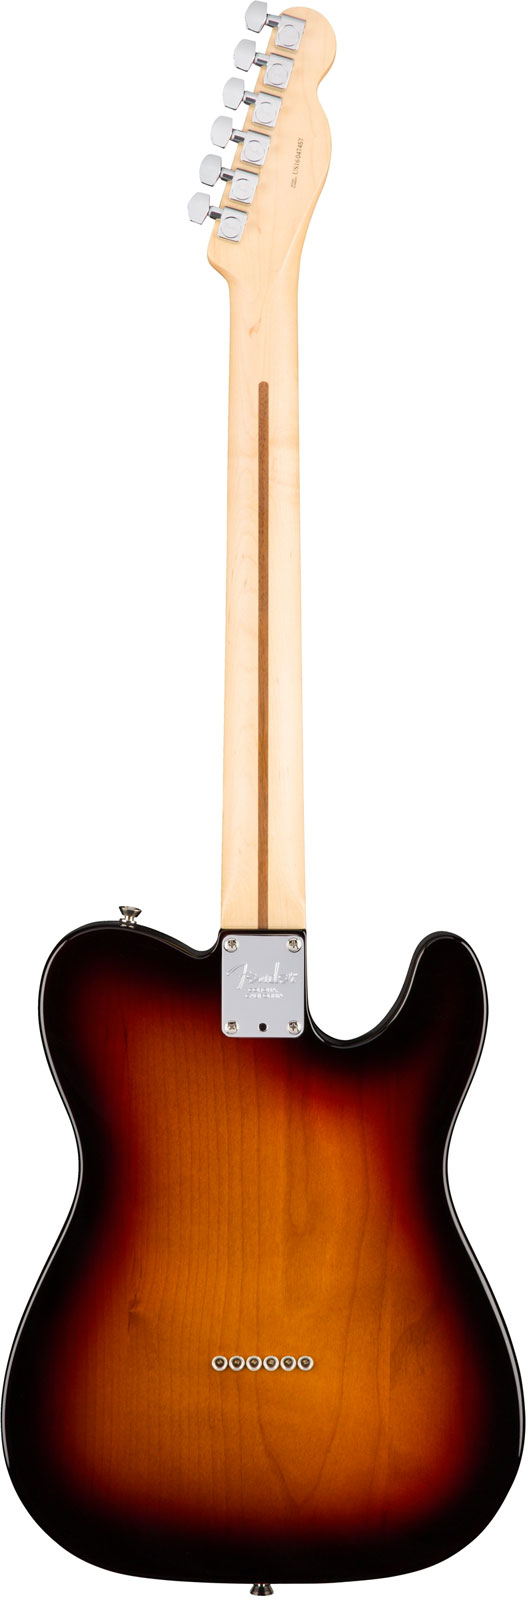 Fender Tele American Professional Lh Usa Gaucher 2s Mn - 3-color Sunburst - Left-handed electric guitar - Variation 1